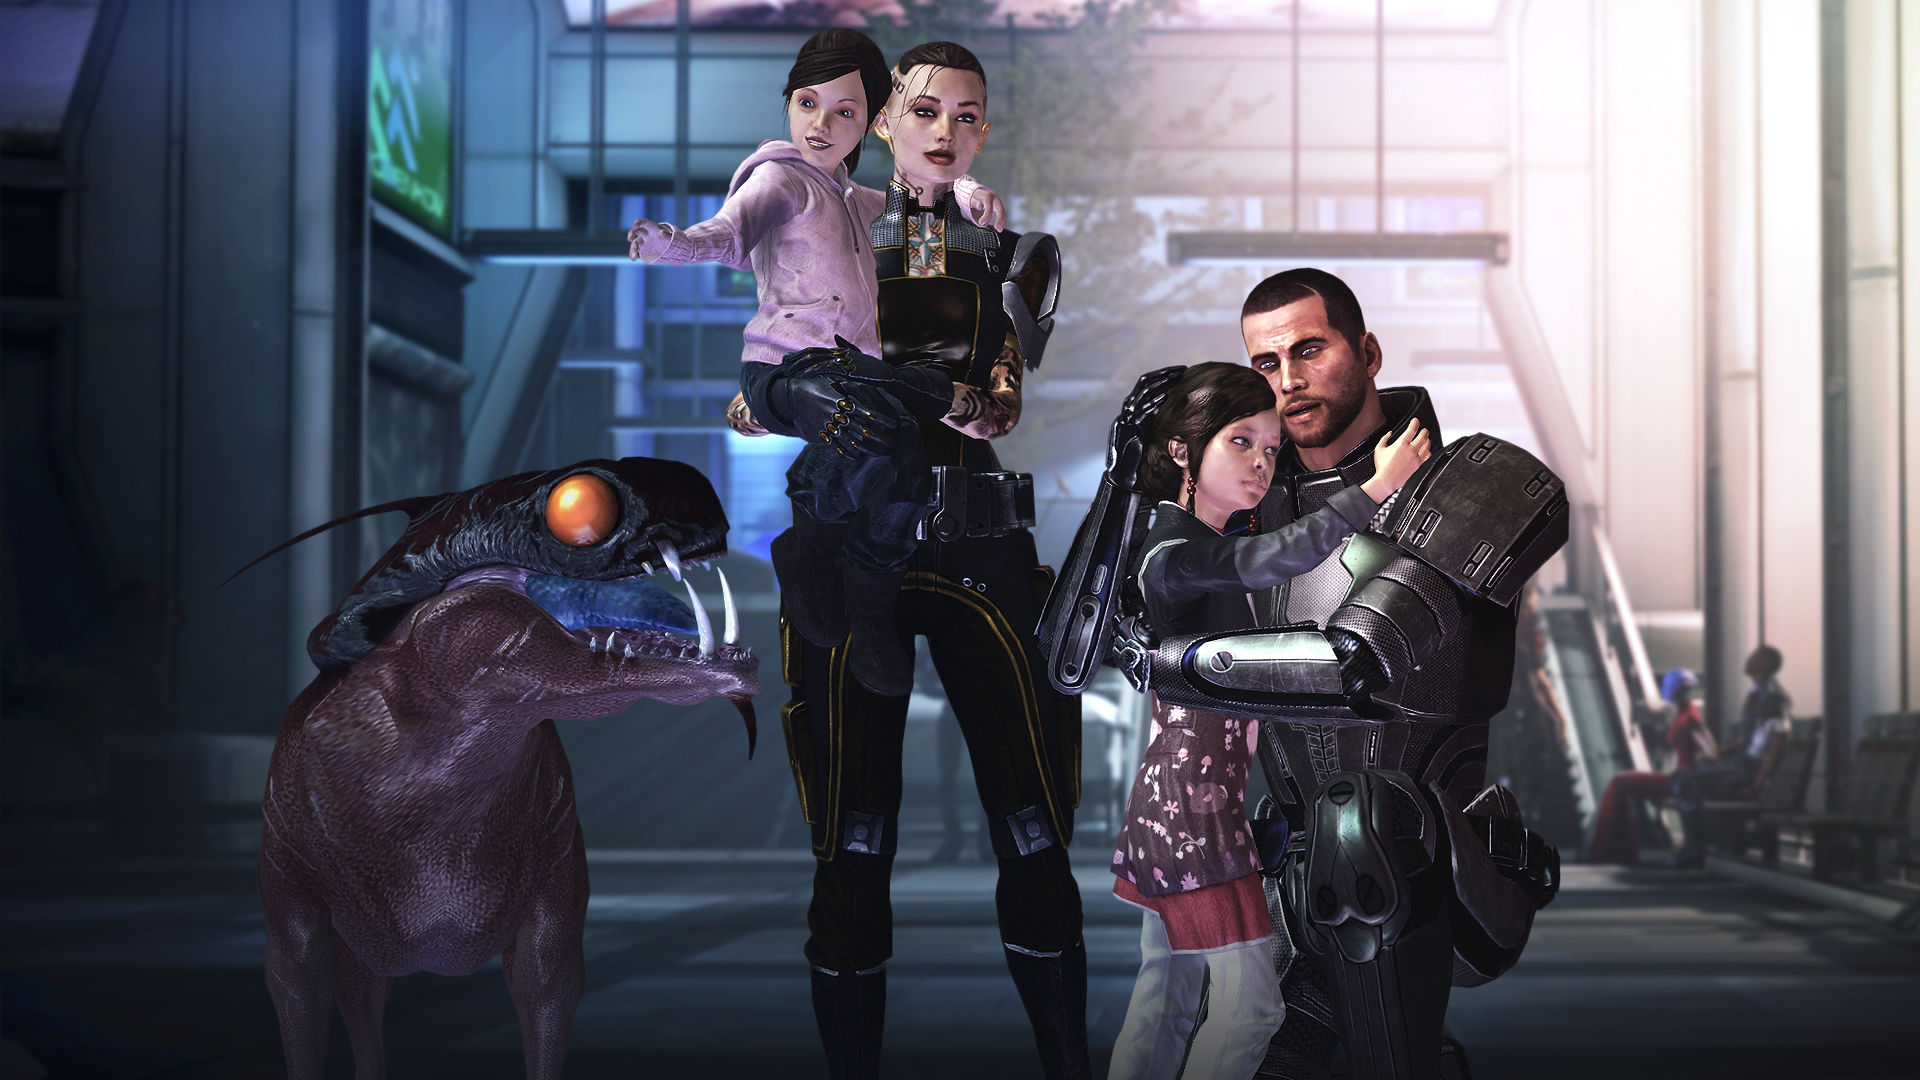 General 1920x1080 Mass Effect 3 Jack (Mass Effect) Commander Shepard video games science fiction women Science Fiction Men Video Game Heroes video game men children PC gaming